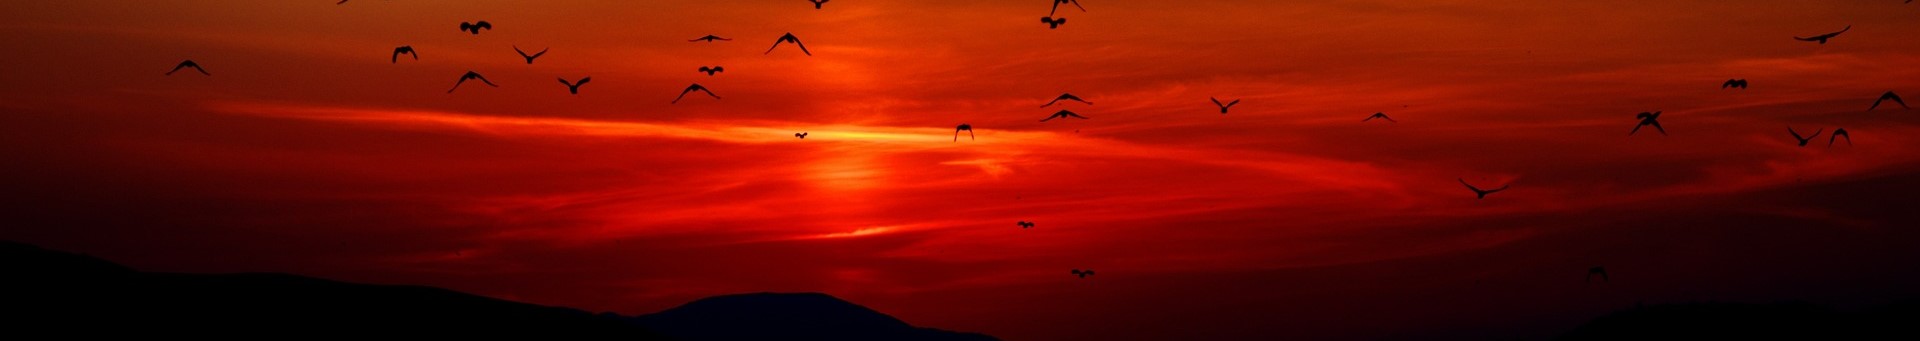 MOUNTAIN SUNSET WITH BIRDS